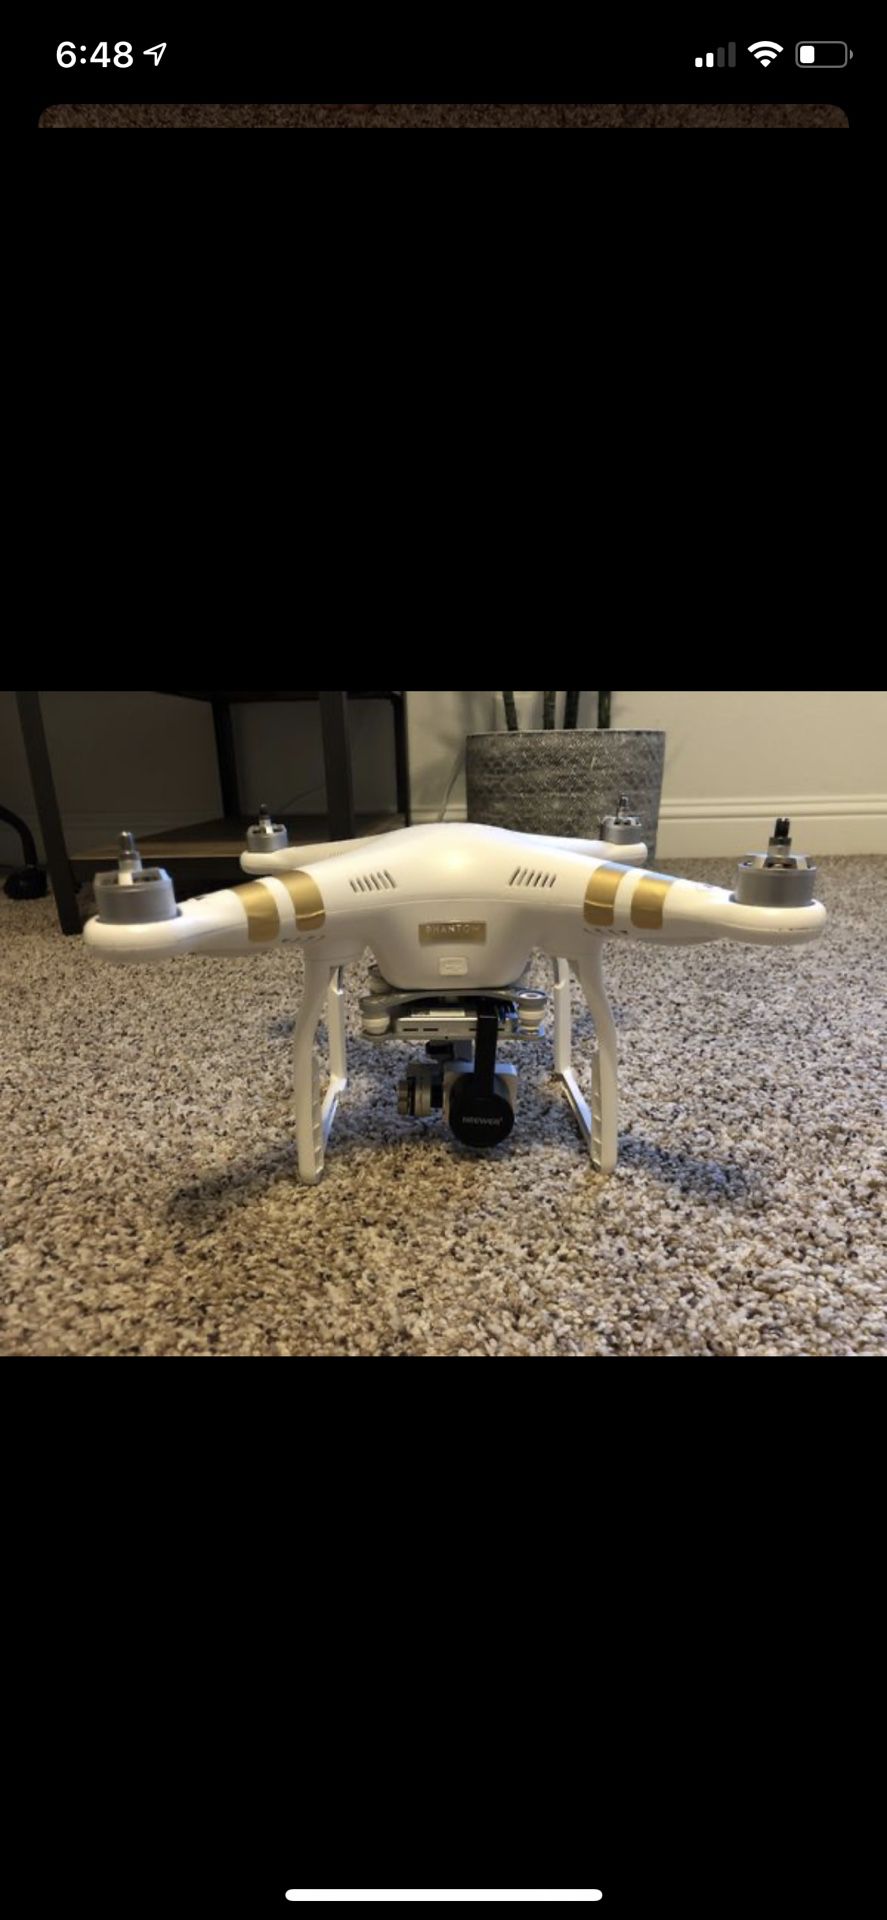 Professional phantom drone 3rd edition